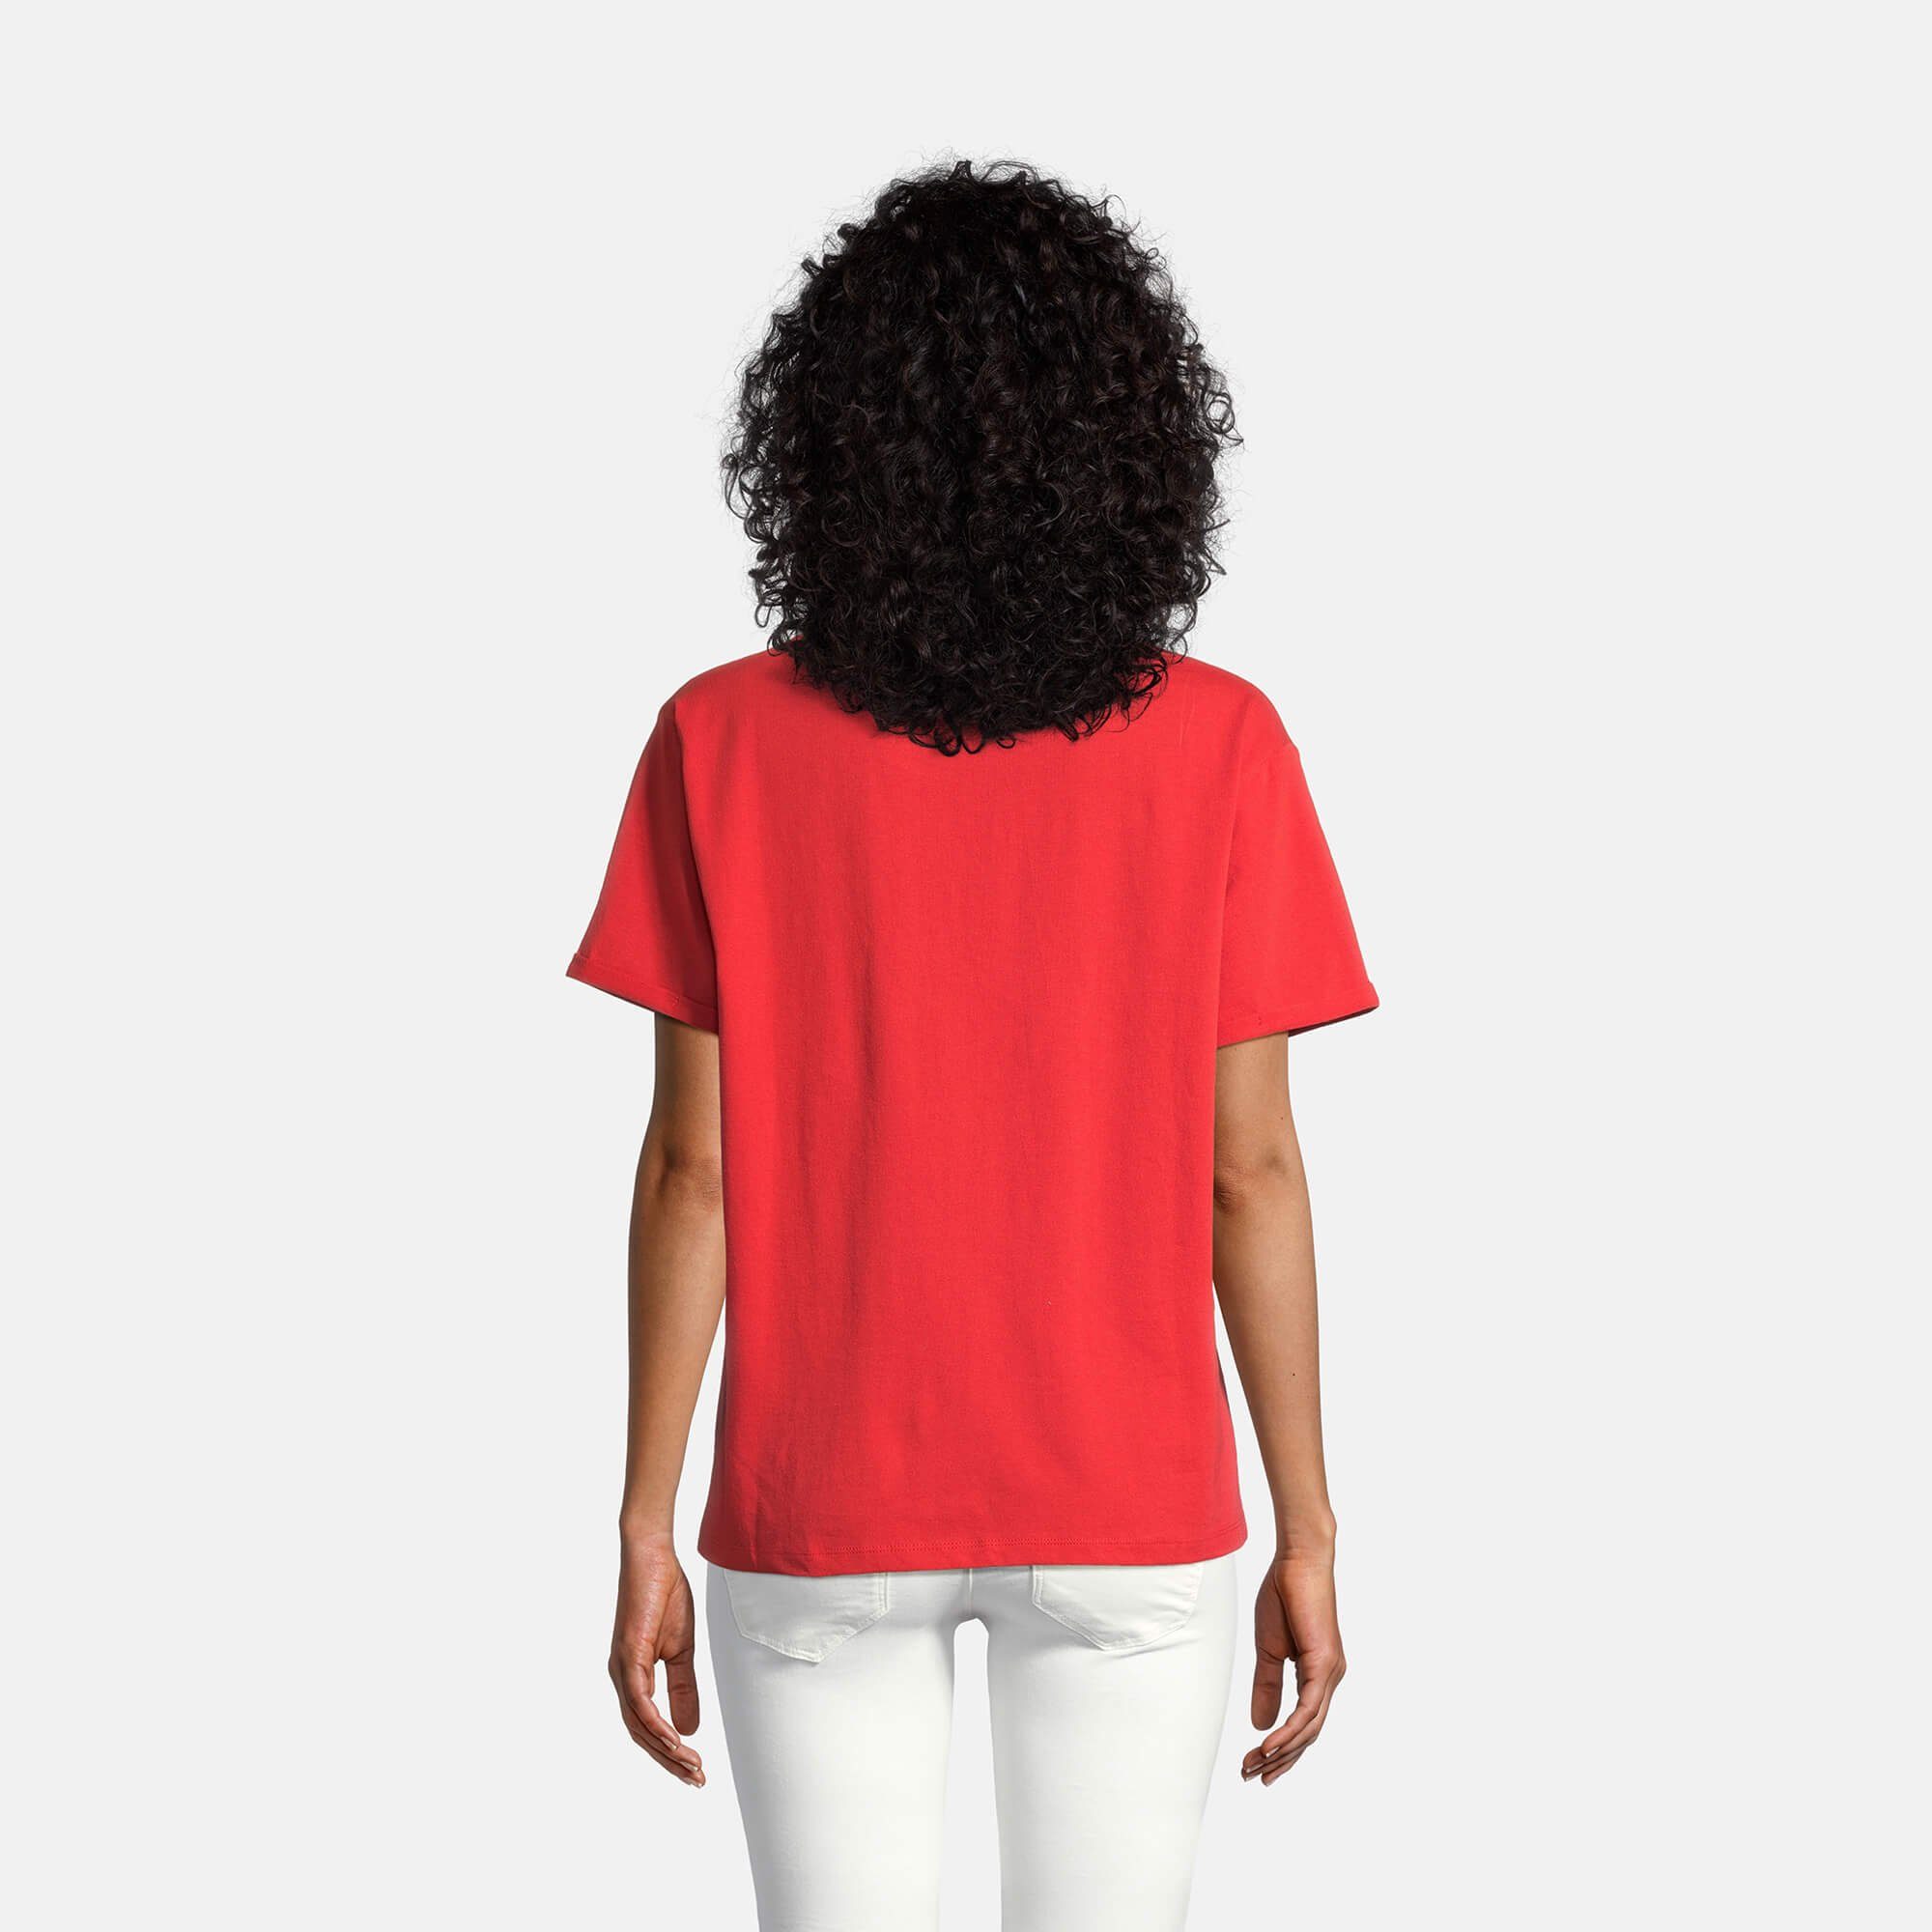 salzhaut T-Shirt Damen Kurzarm-Shirt red Moratz Liebe Baumwolle Front-Beflockung aus chilli mit